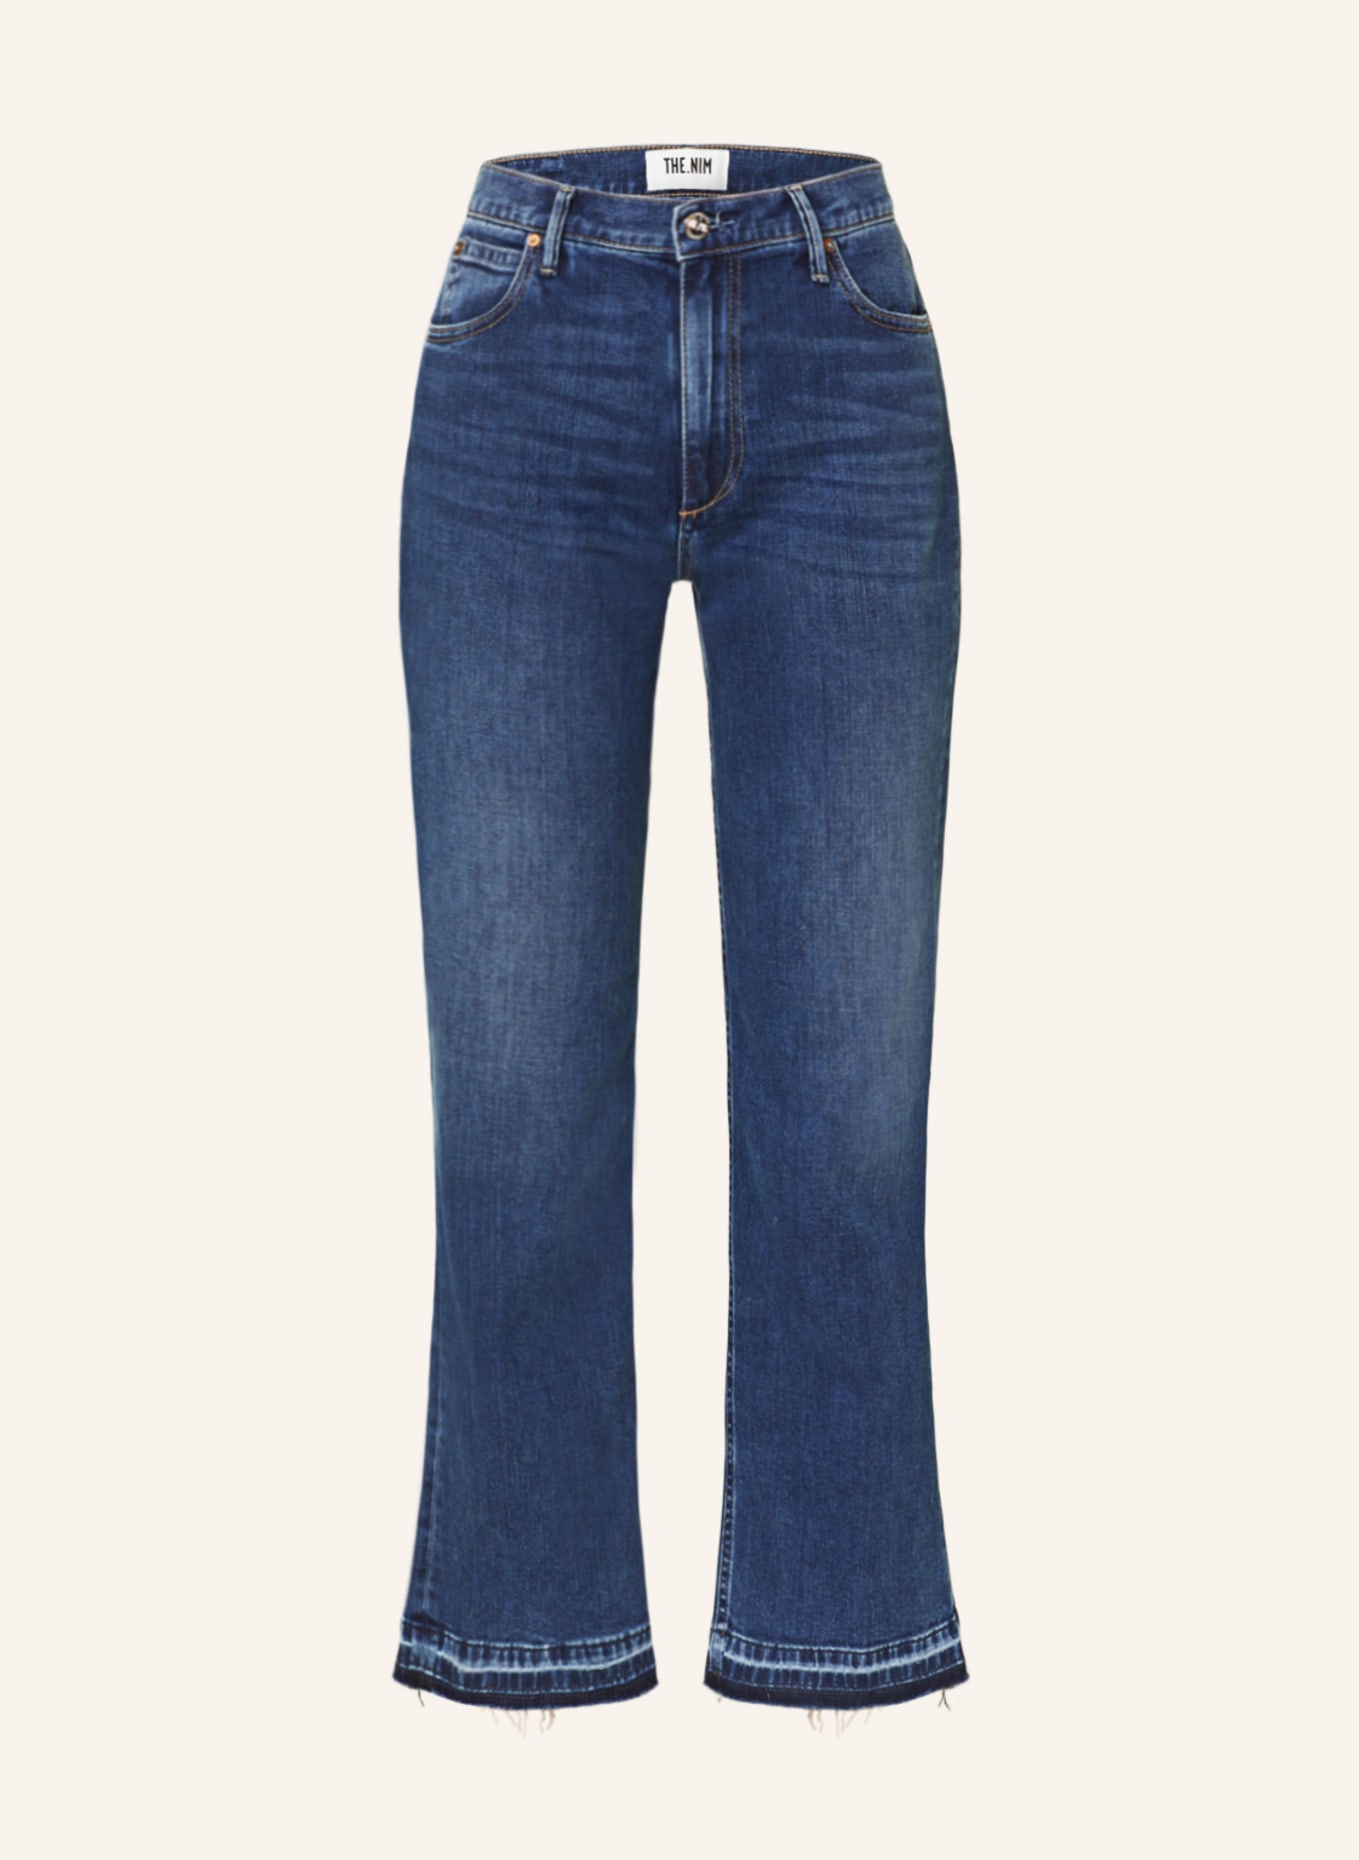 THE.NIM STANDARD Jeans CHERYL, Farbe: W802-MDD DARK WASHED BLUE (Bild 1)